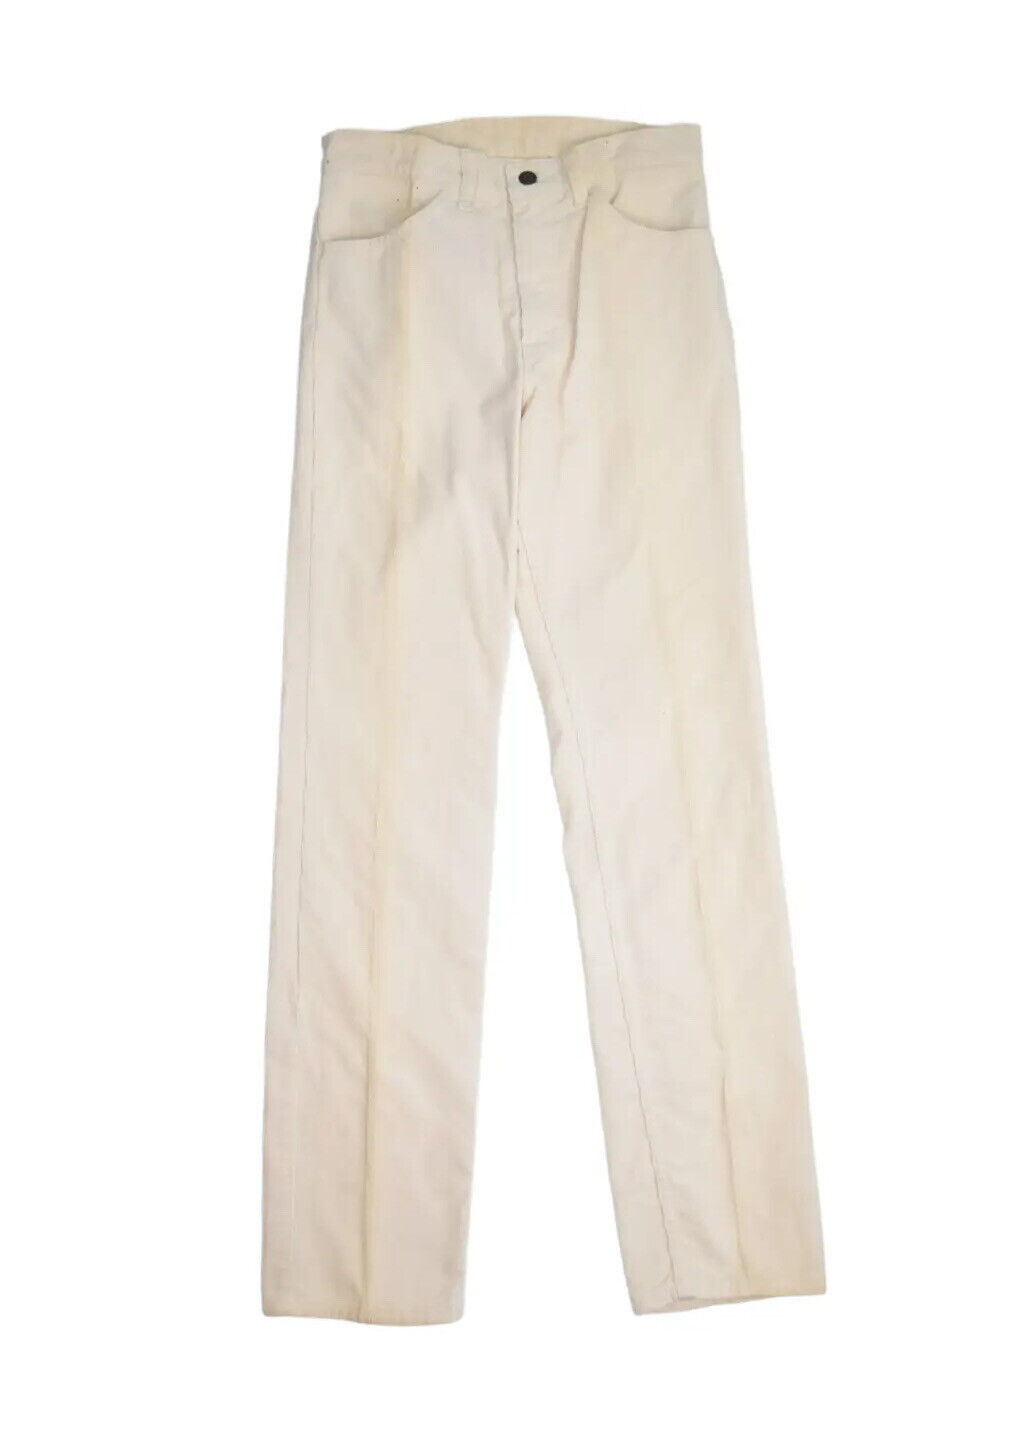 Primary image for Vintage Gap Pioneers Corduroy Pants Womens 28x33 Off White Slim Straight